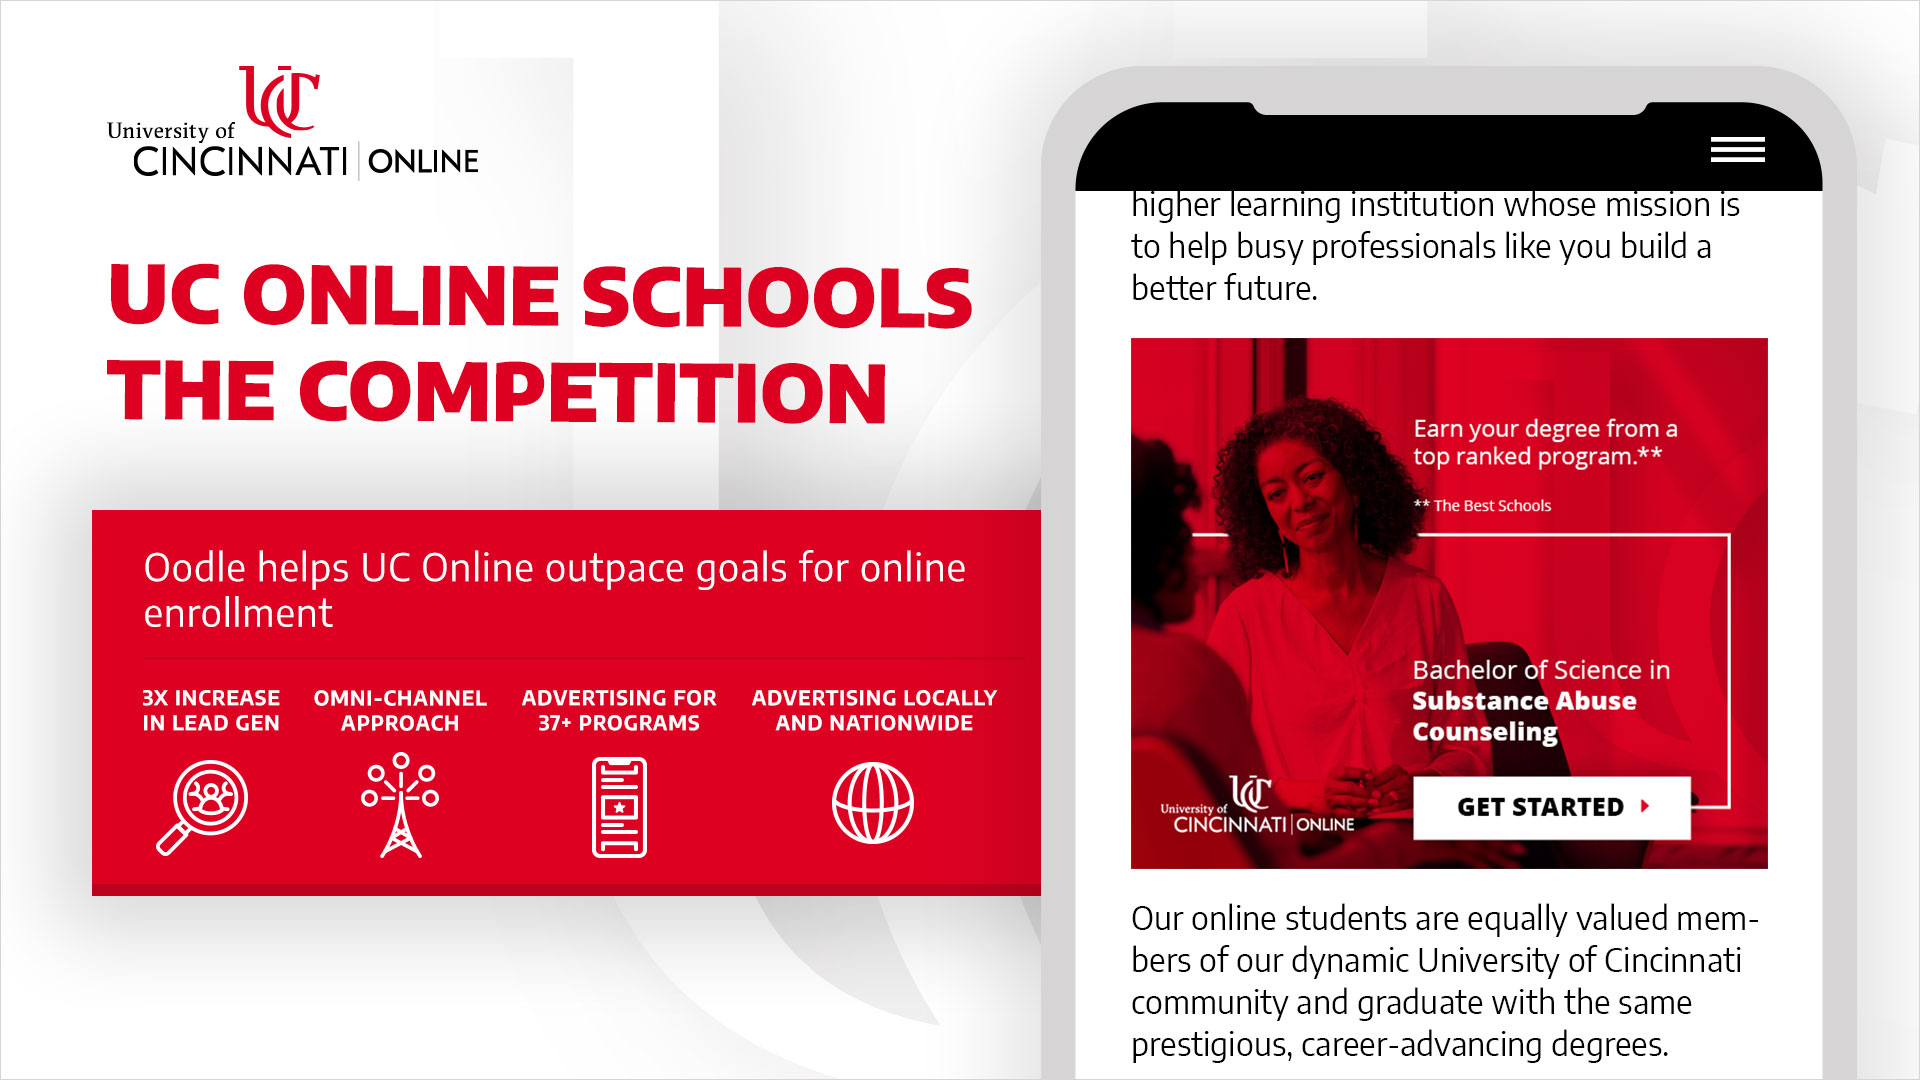 University of Cincinnati Online schools the competition